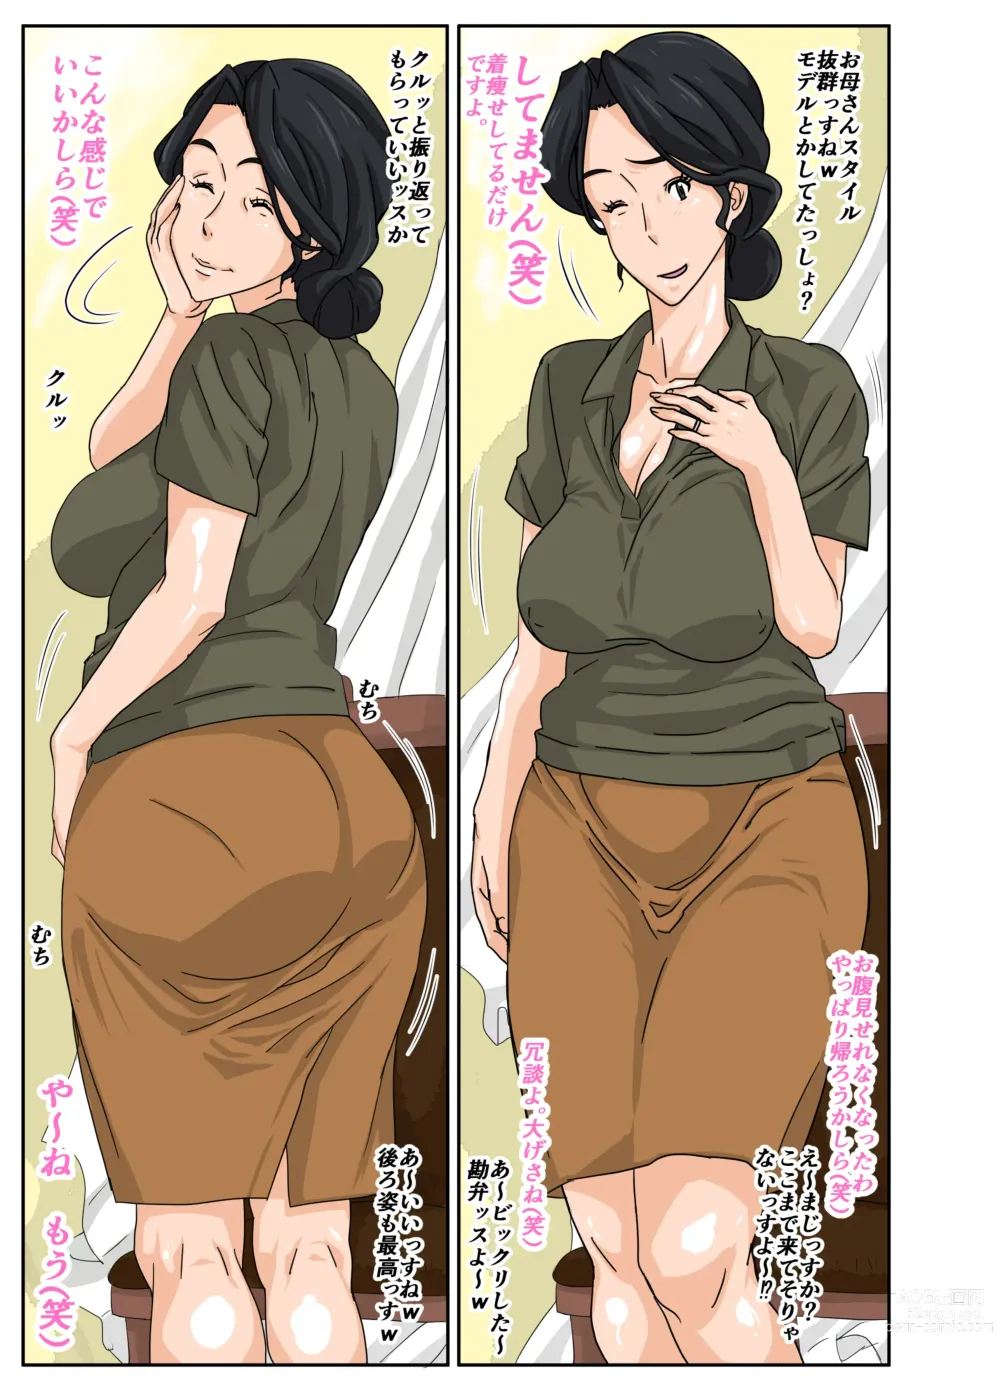 Page 5 of doujinshi Kaa-chan to Charao